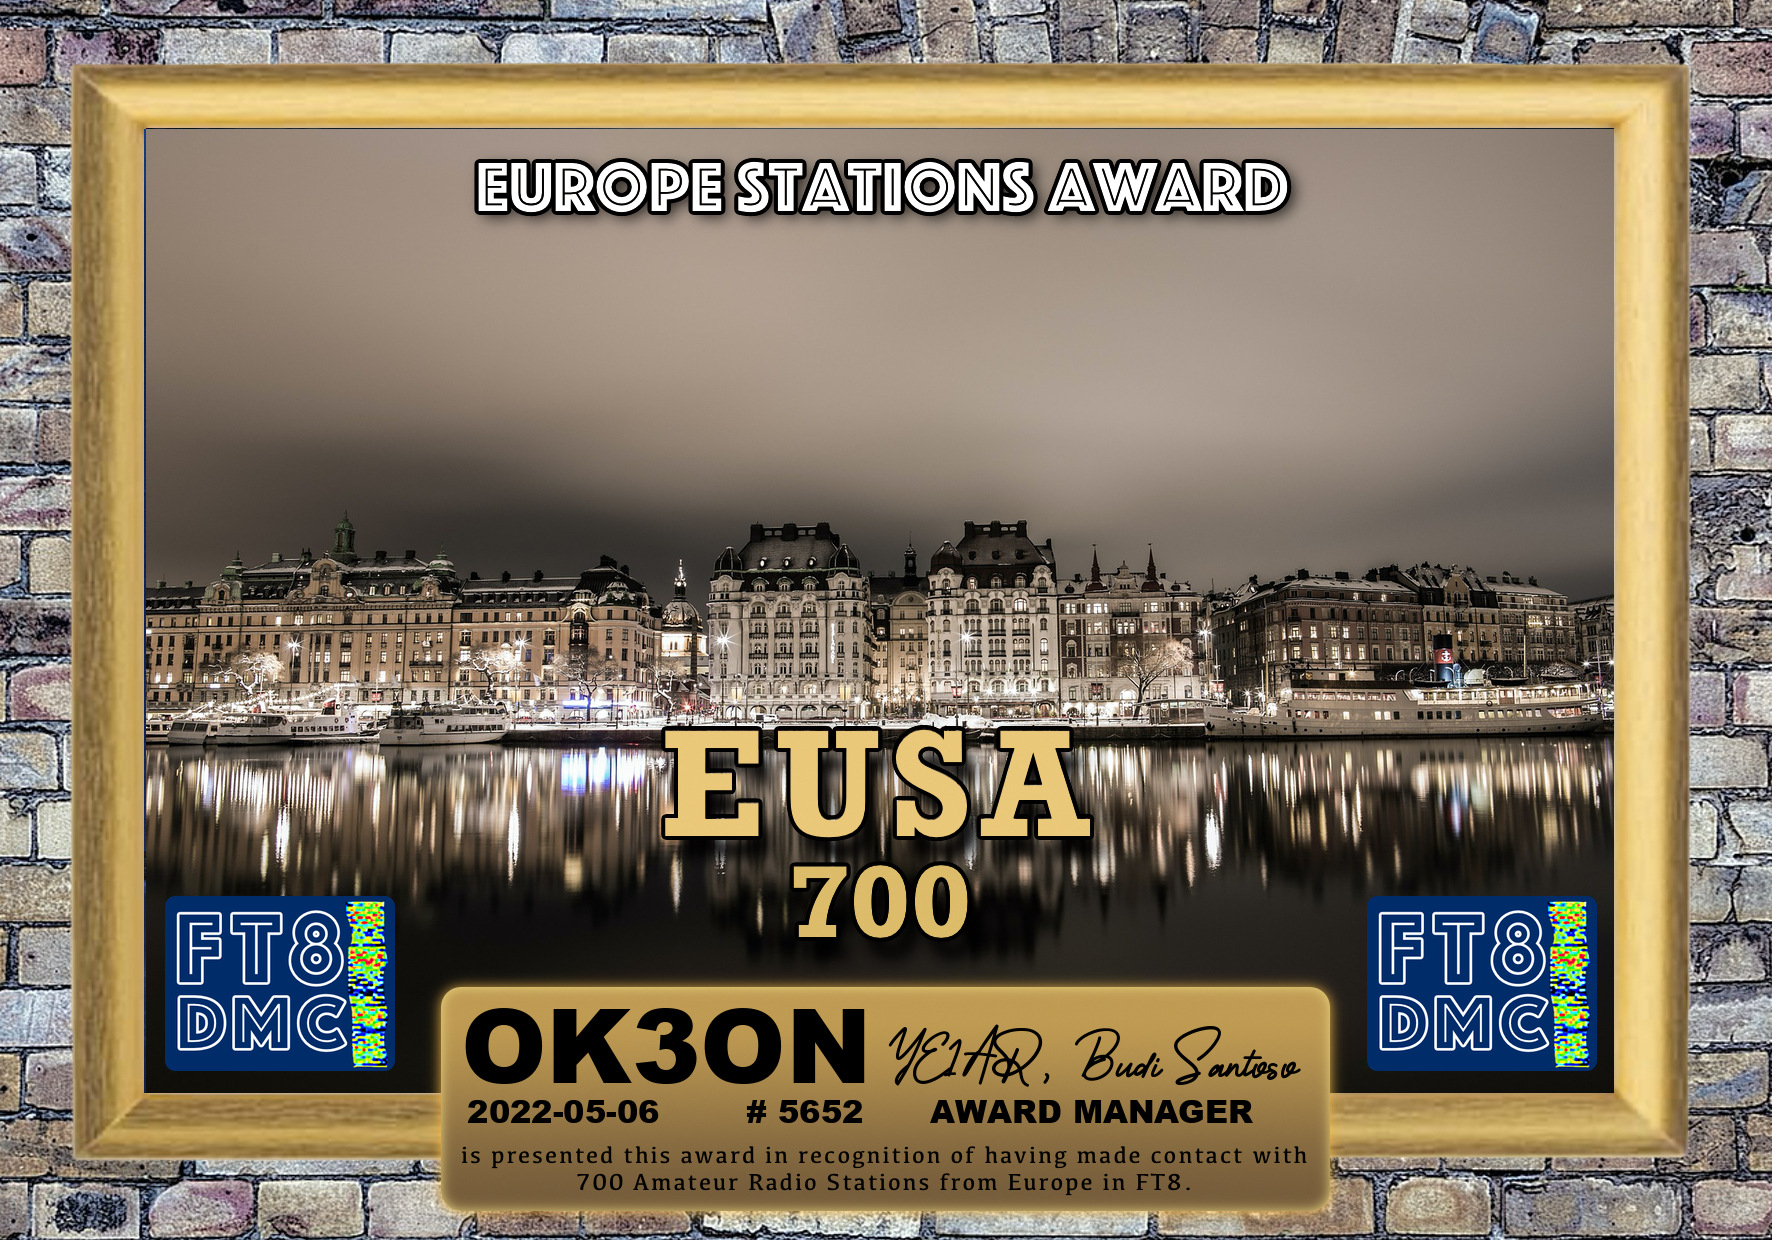 awards/OK3ON-EUSA-700_FT8DMC.jpg